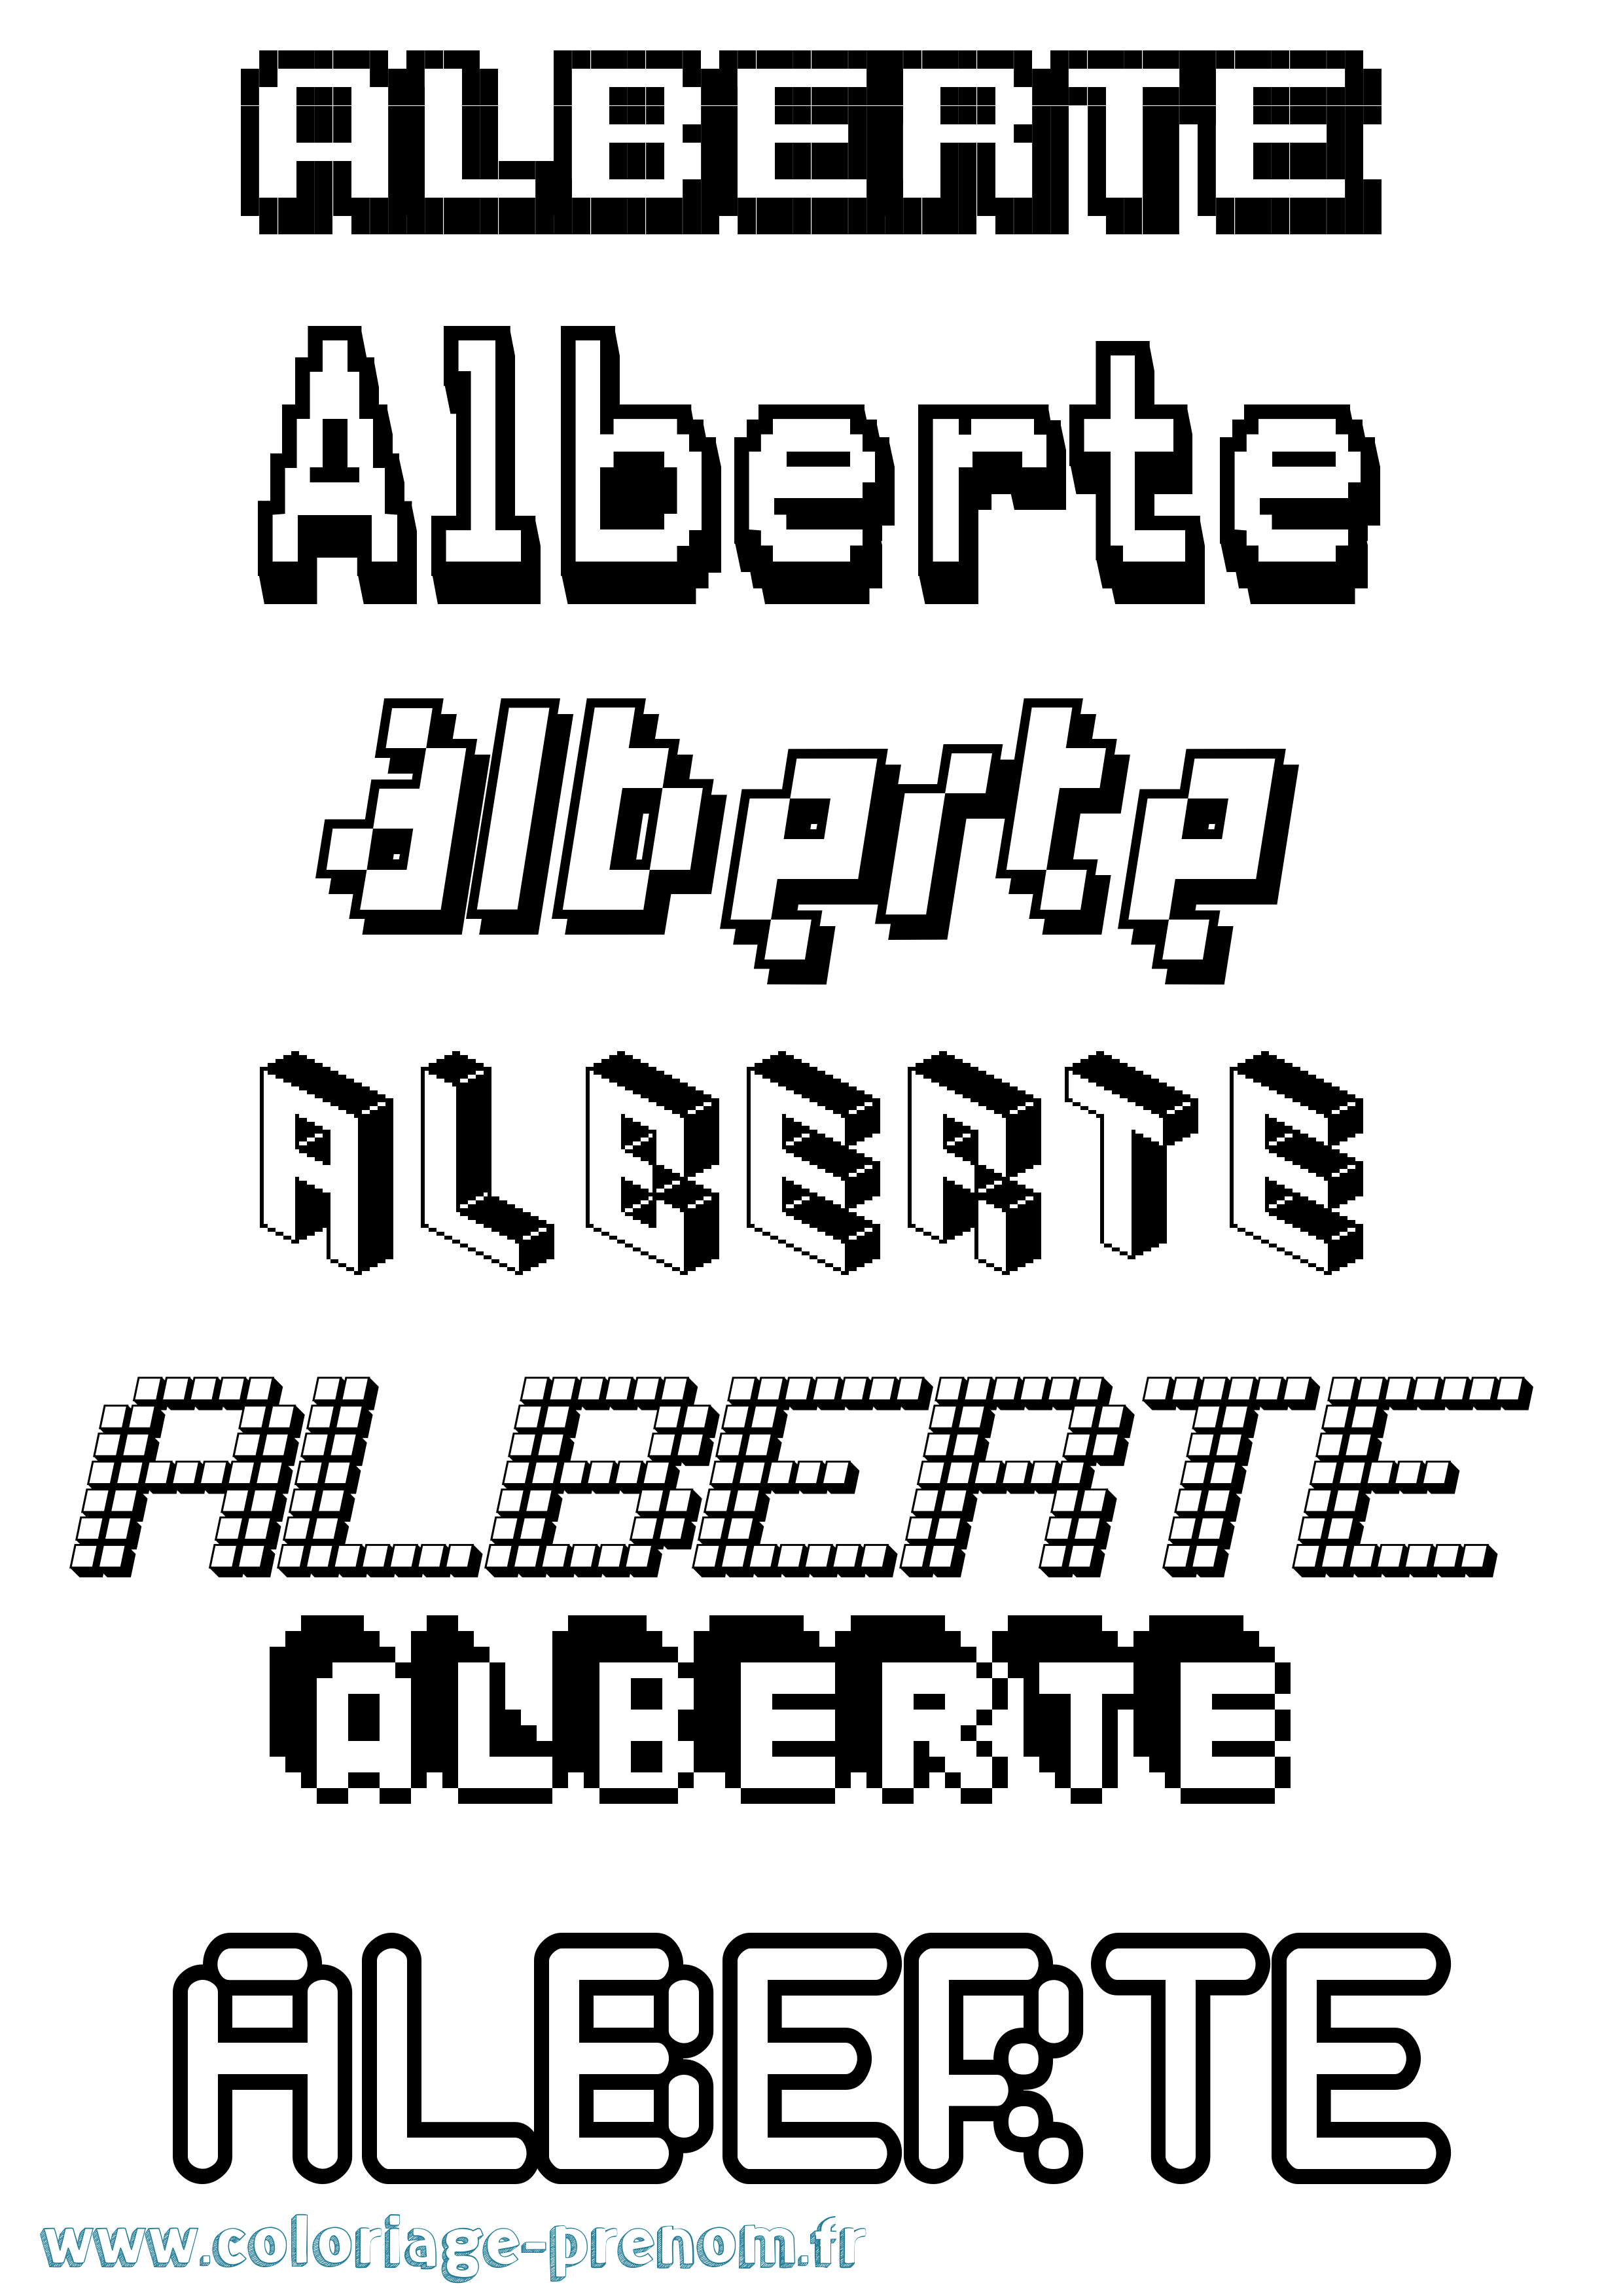 Coloriage prénom Alberte Pixel